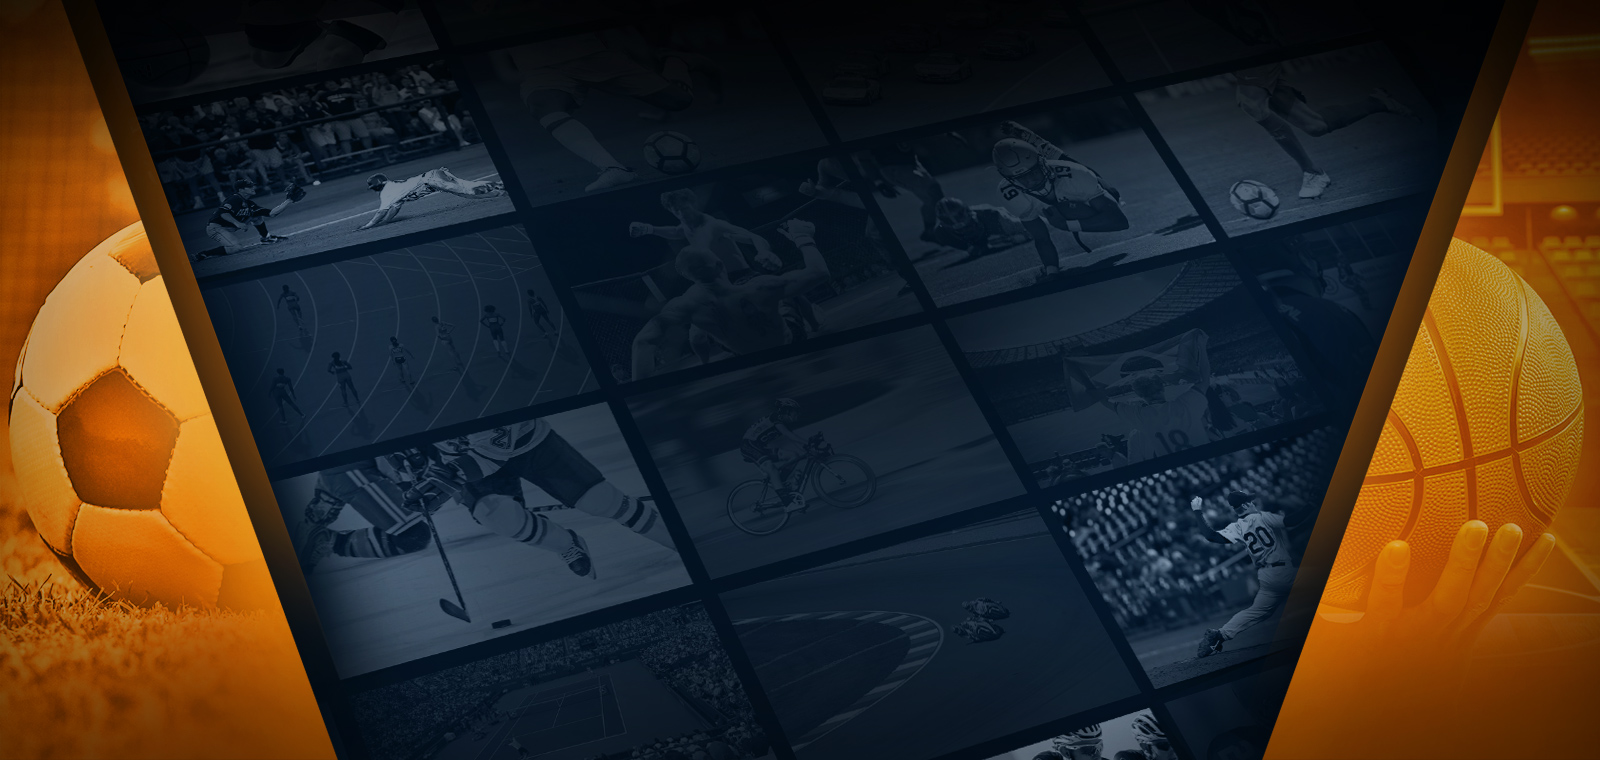 Entertainment Sports Startup FuboTV Secures $55 Million